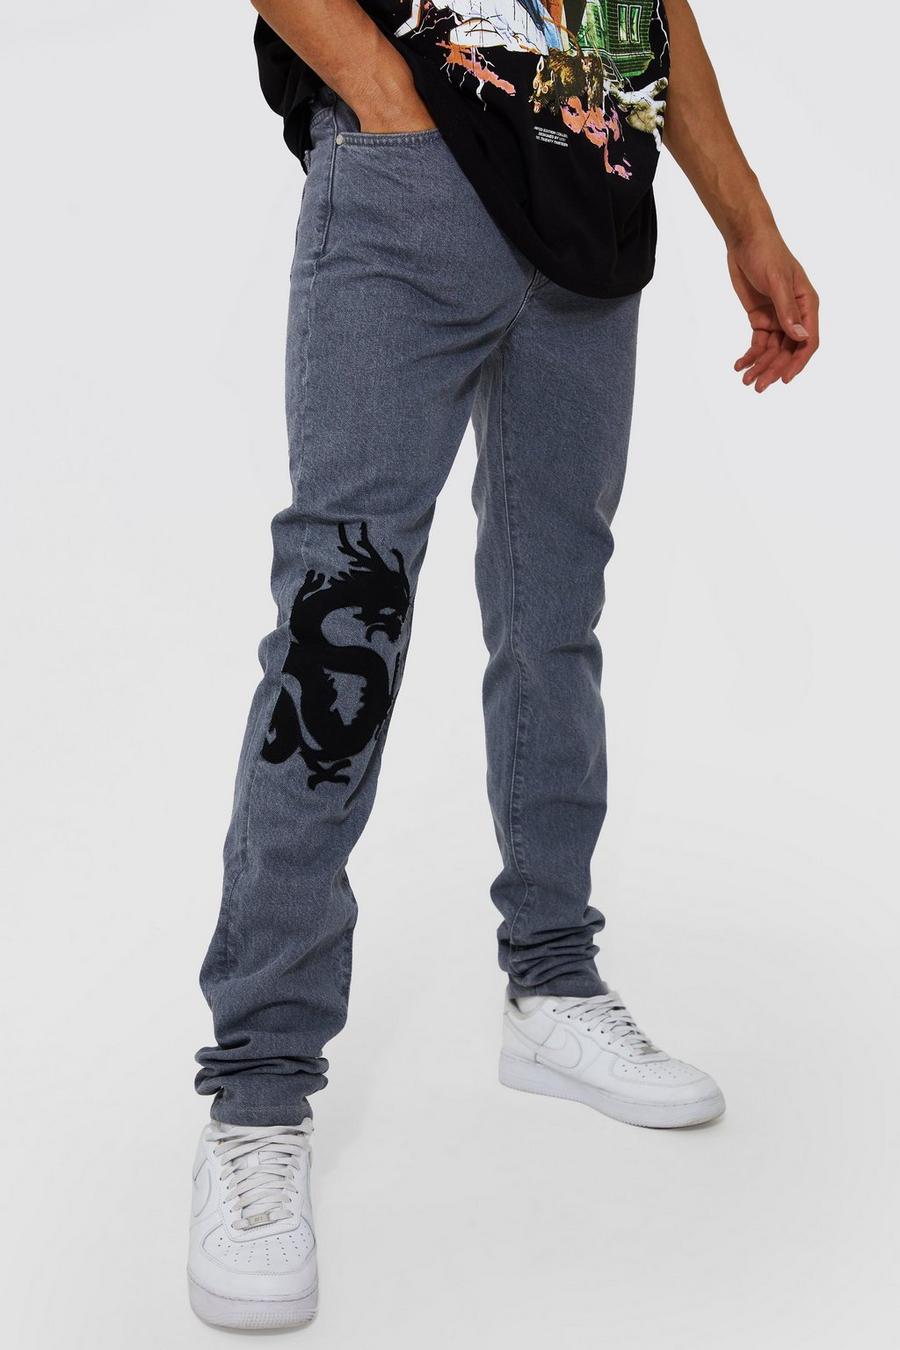 Light grey סקיני ג'ינס קשיח עם אפליקציית דרקון, לגברים גבוהים